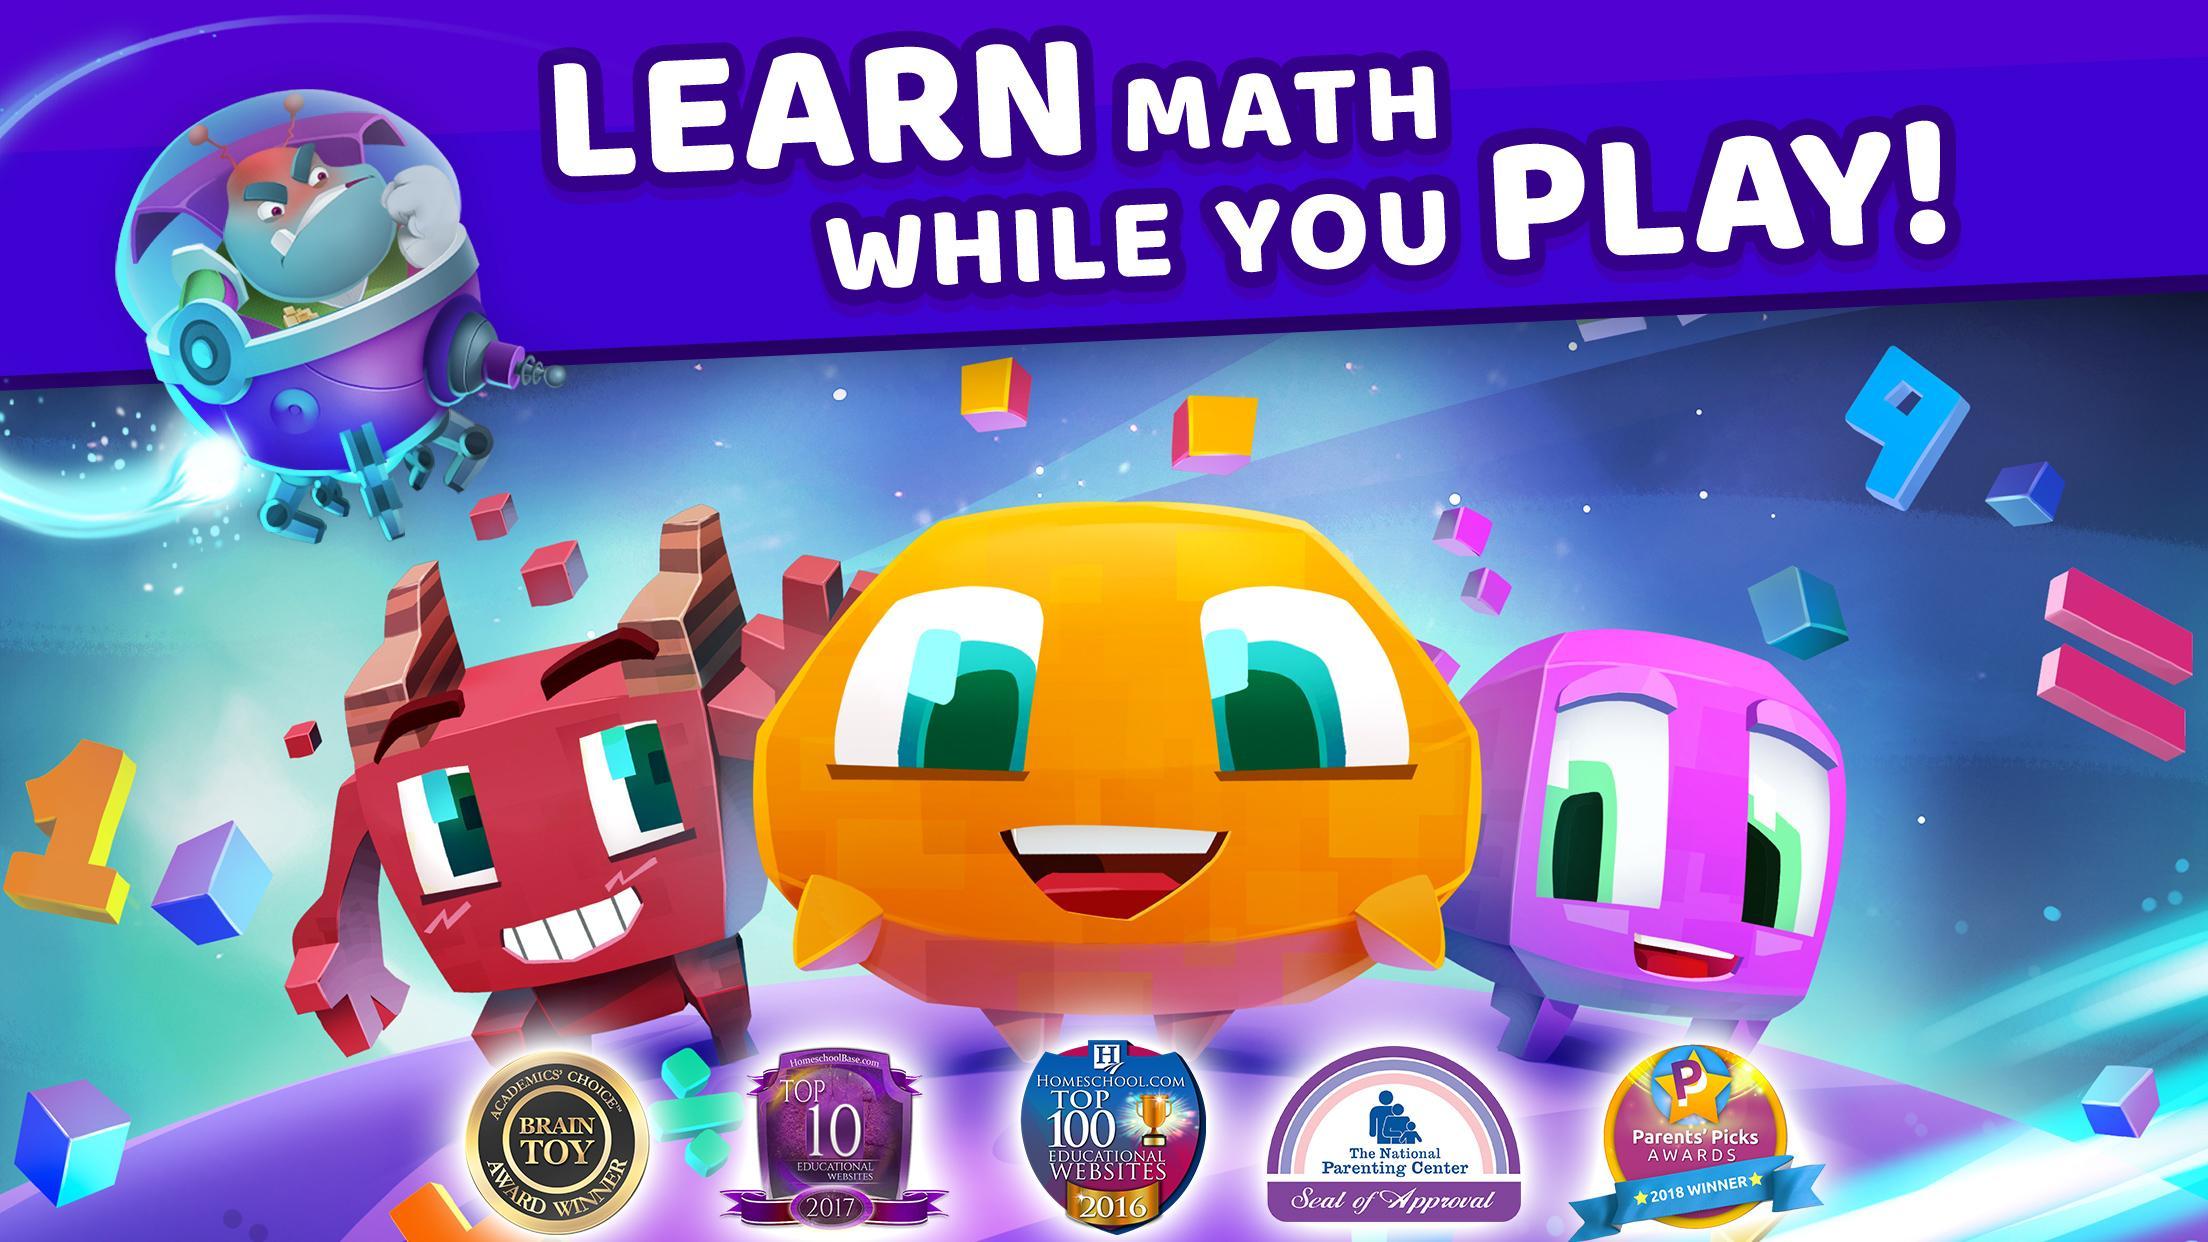 Matific Galaxy - Maths Games for 6th Graders 2.2.2 Screenshot 13